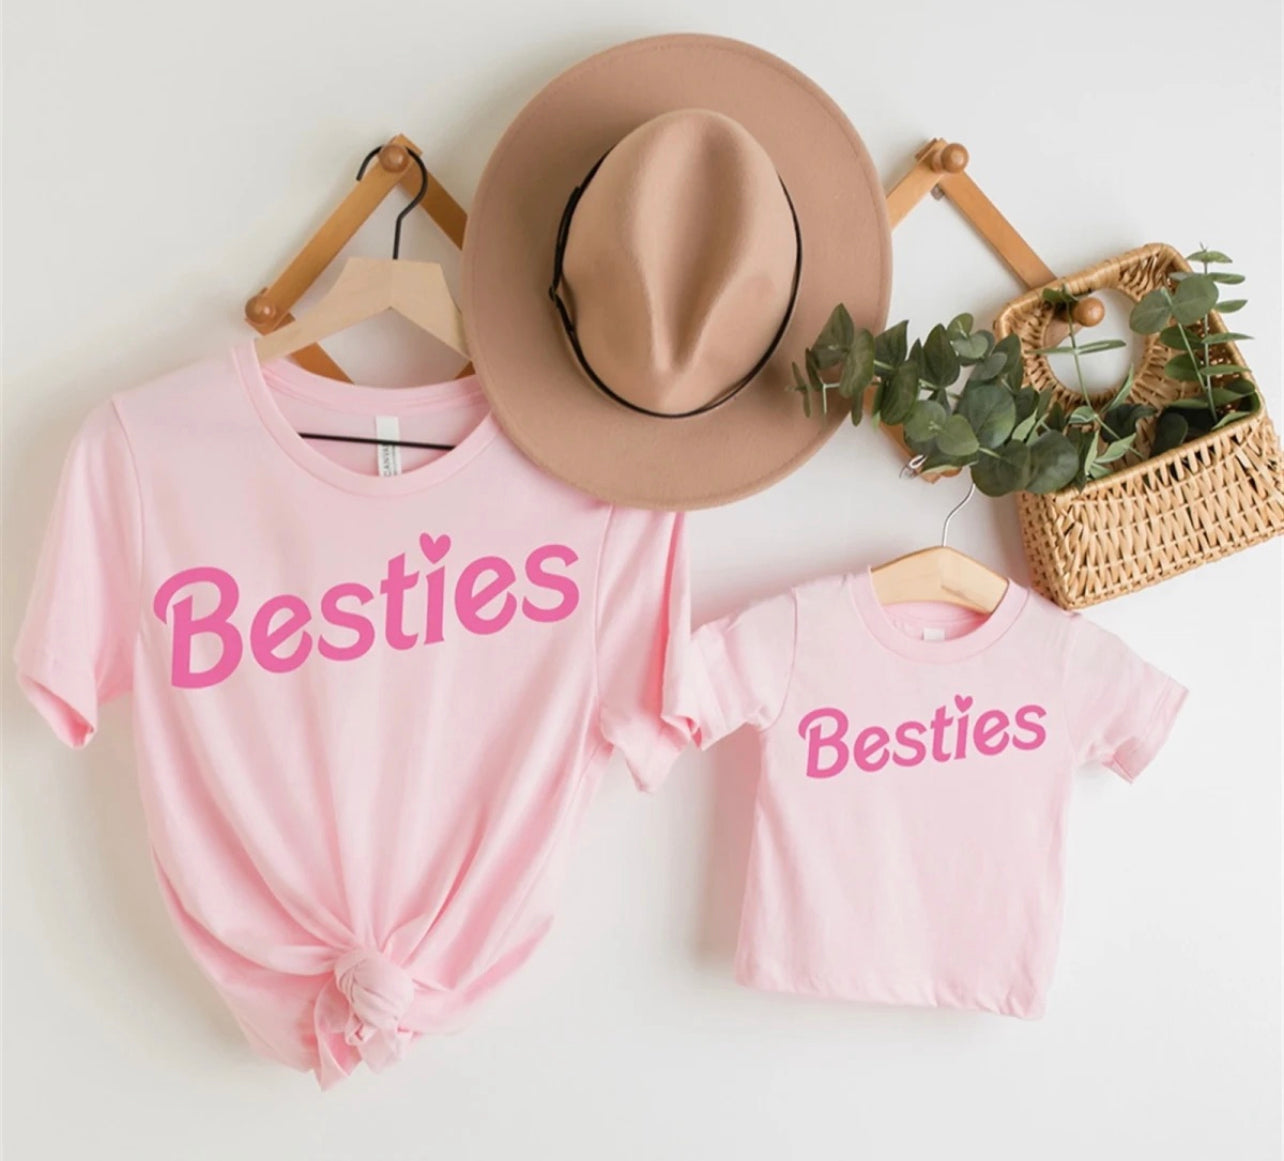 Besties shirt| Barbie besties shirt| Gift for barbie fan| Barbie tee| Barbie Girl shirt